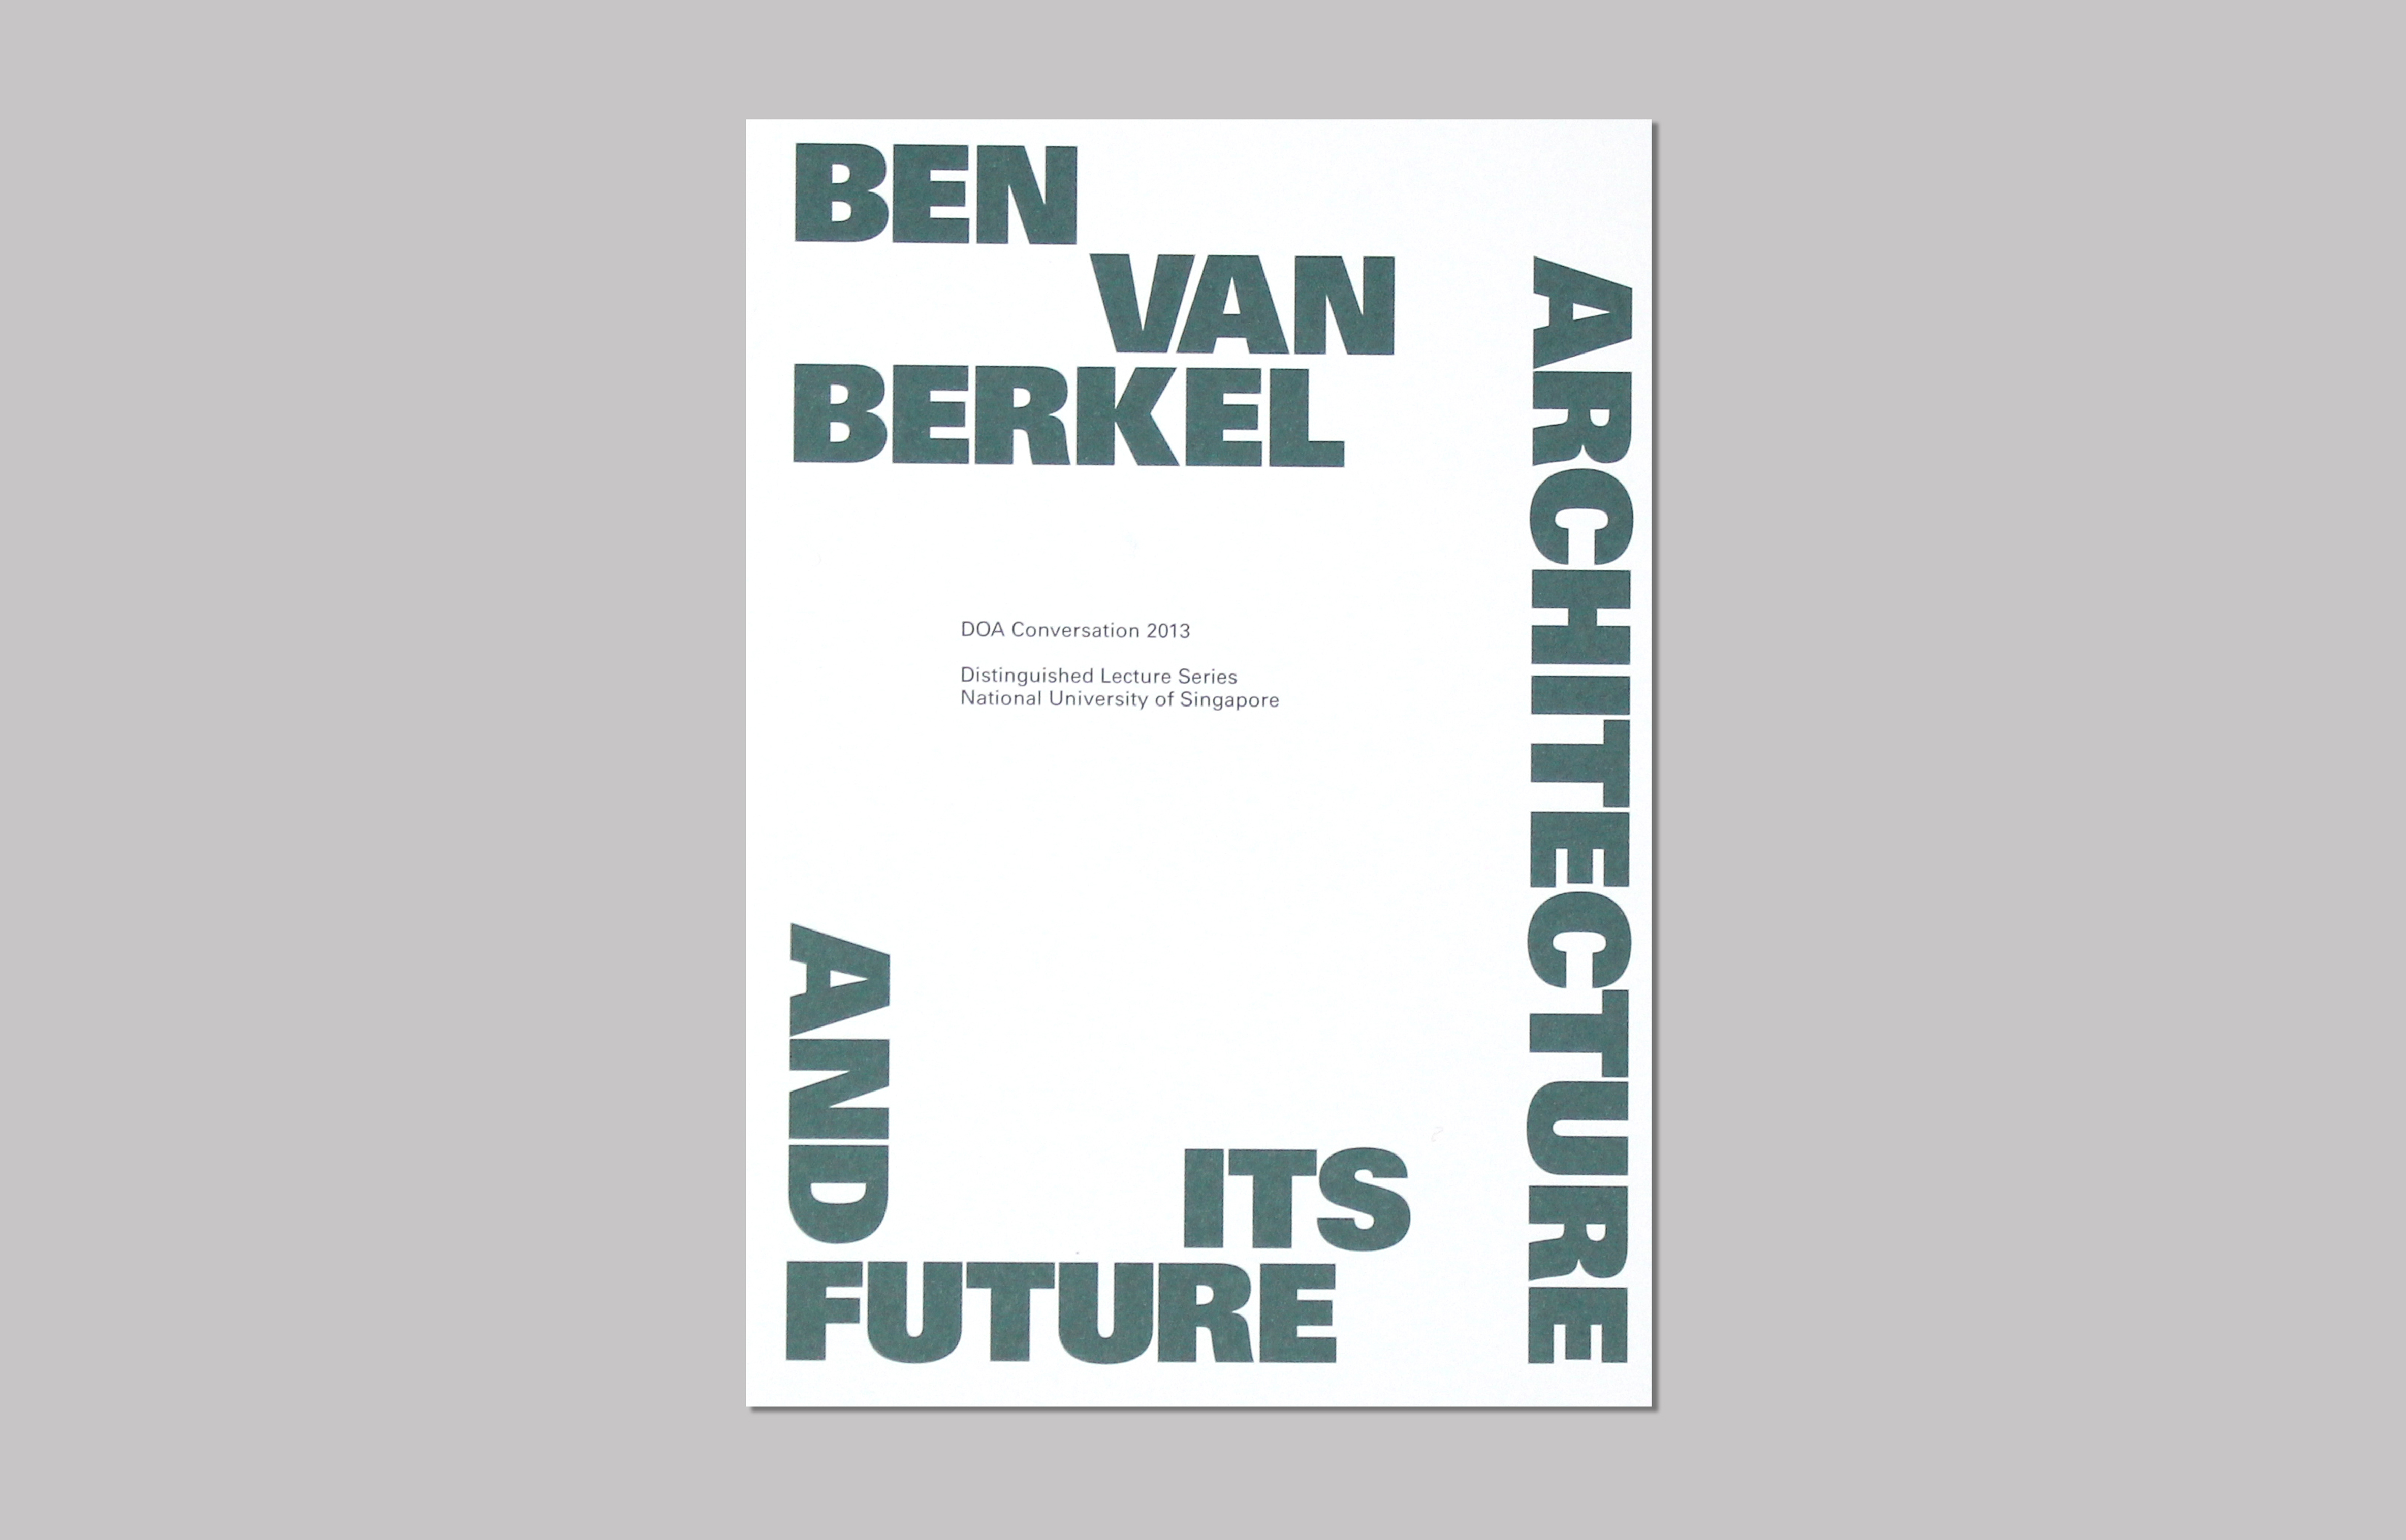 Ben Van Berkel and Its Future - DOA Conversation 2013